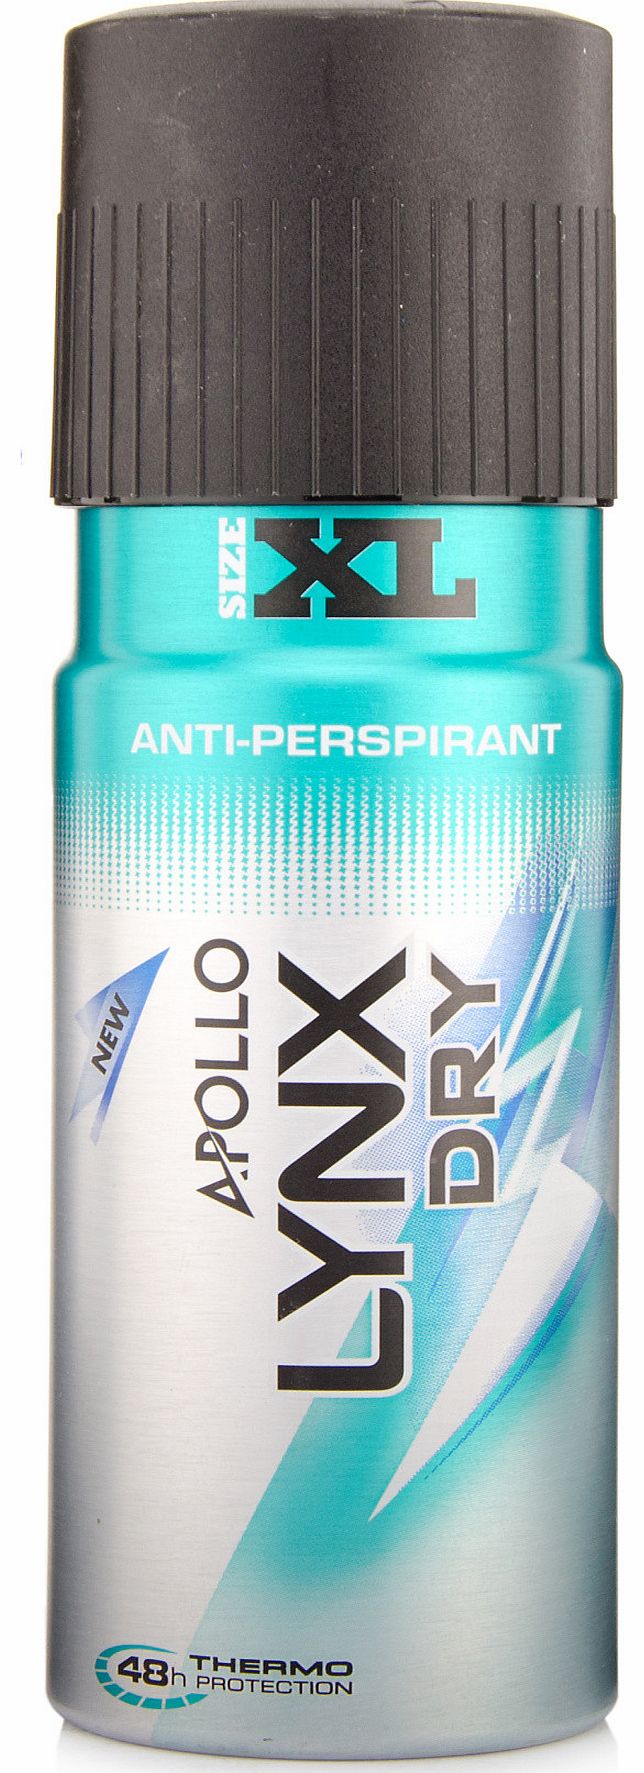 Lynx Dry XL Apollo Anti-Perspirant Deodorant